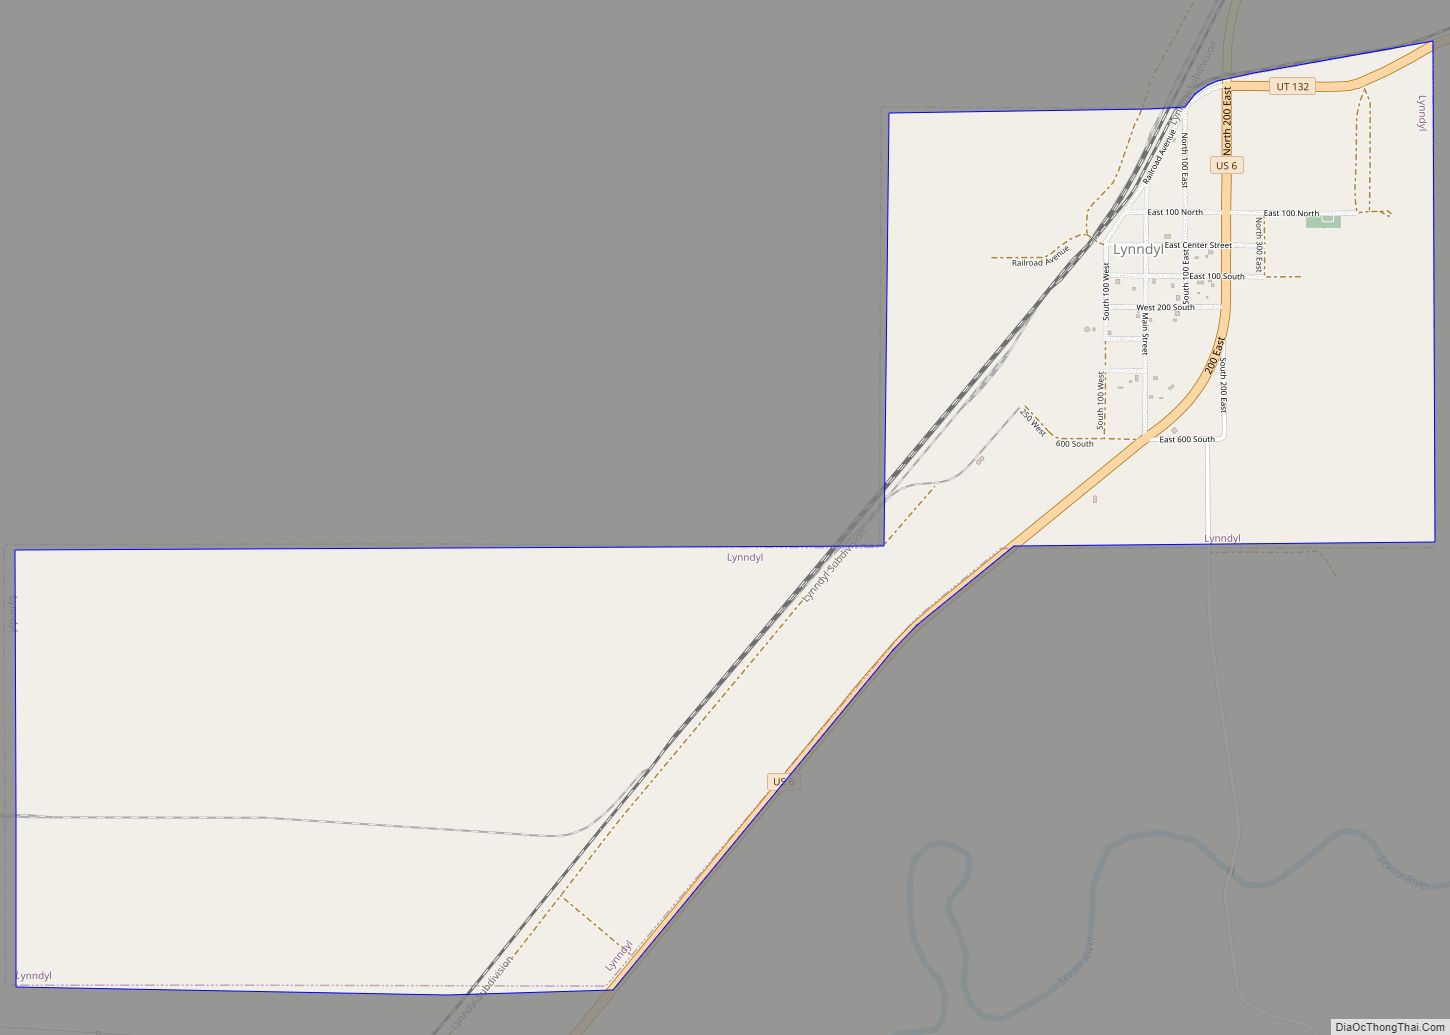 Map of Lynndyl town